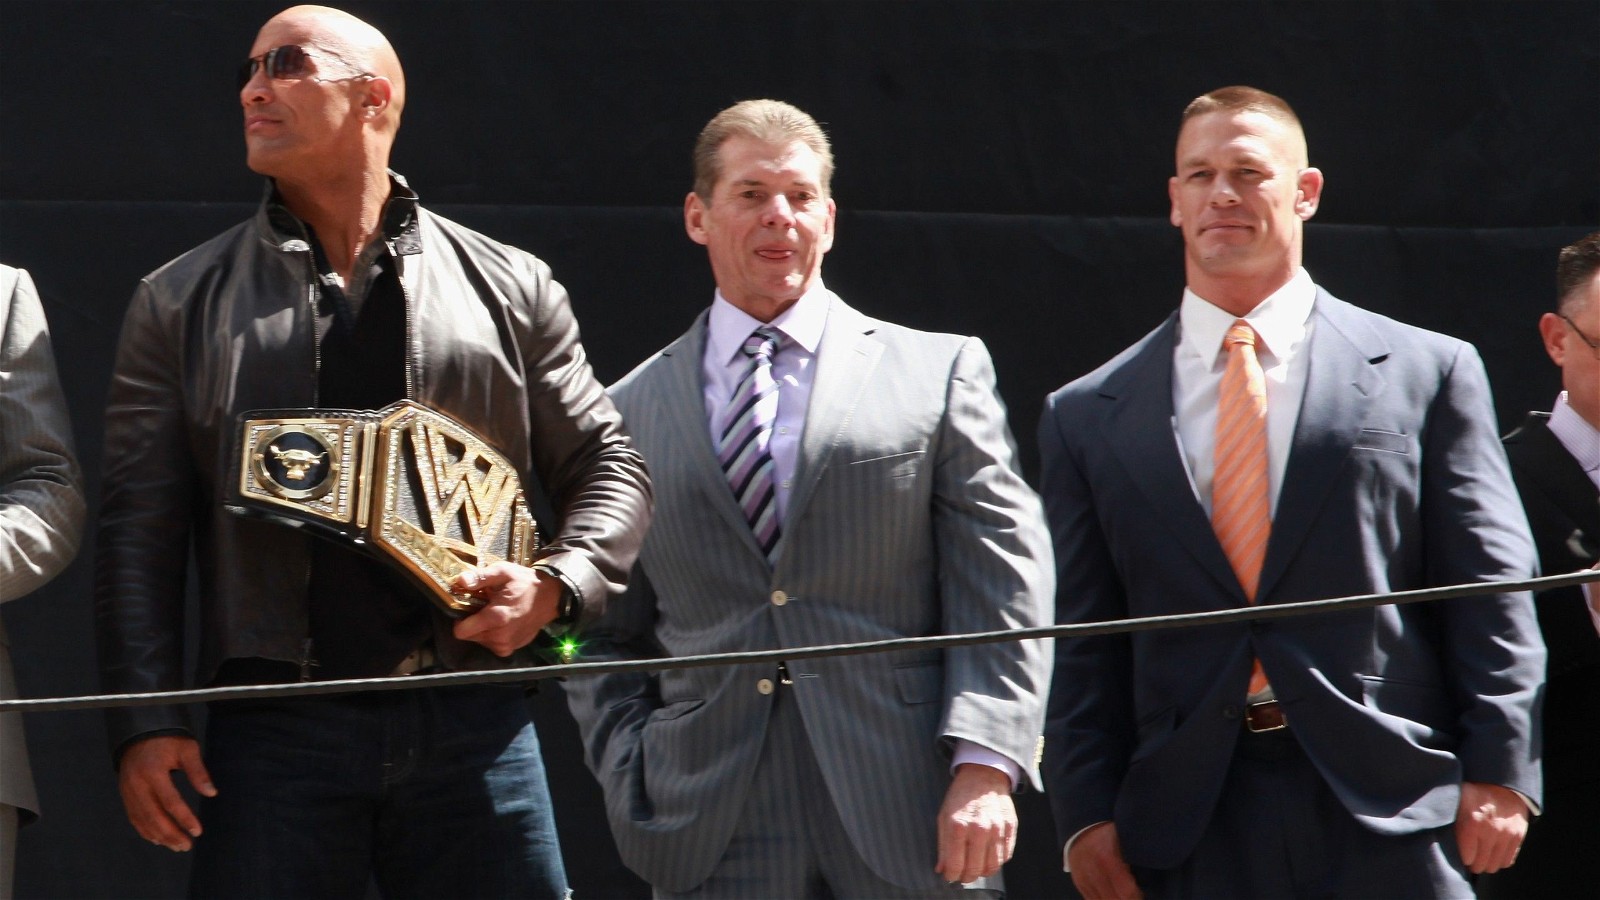 Dwayne Johnson with Vince McMahon and John Cena